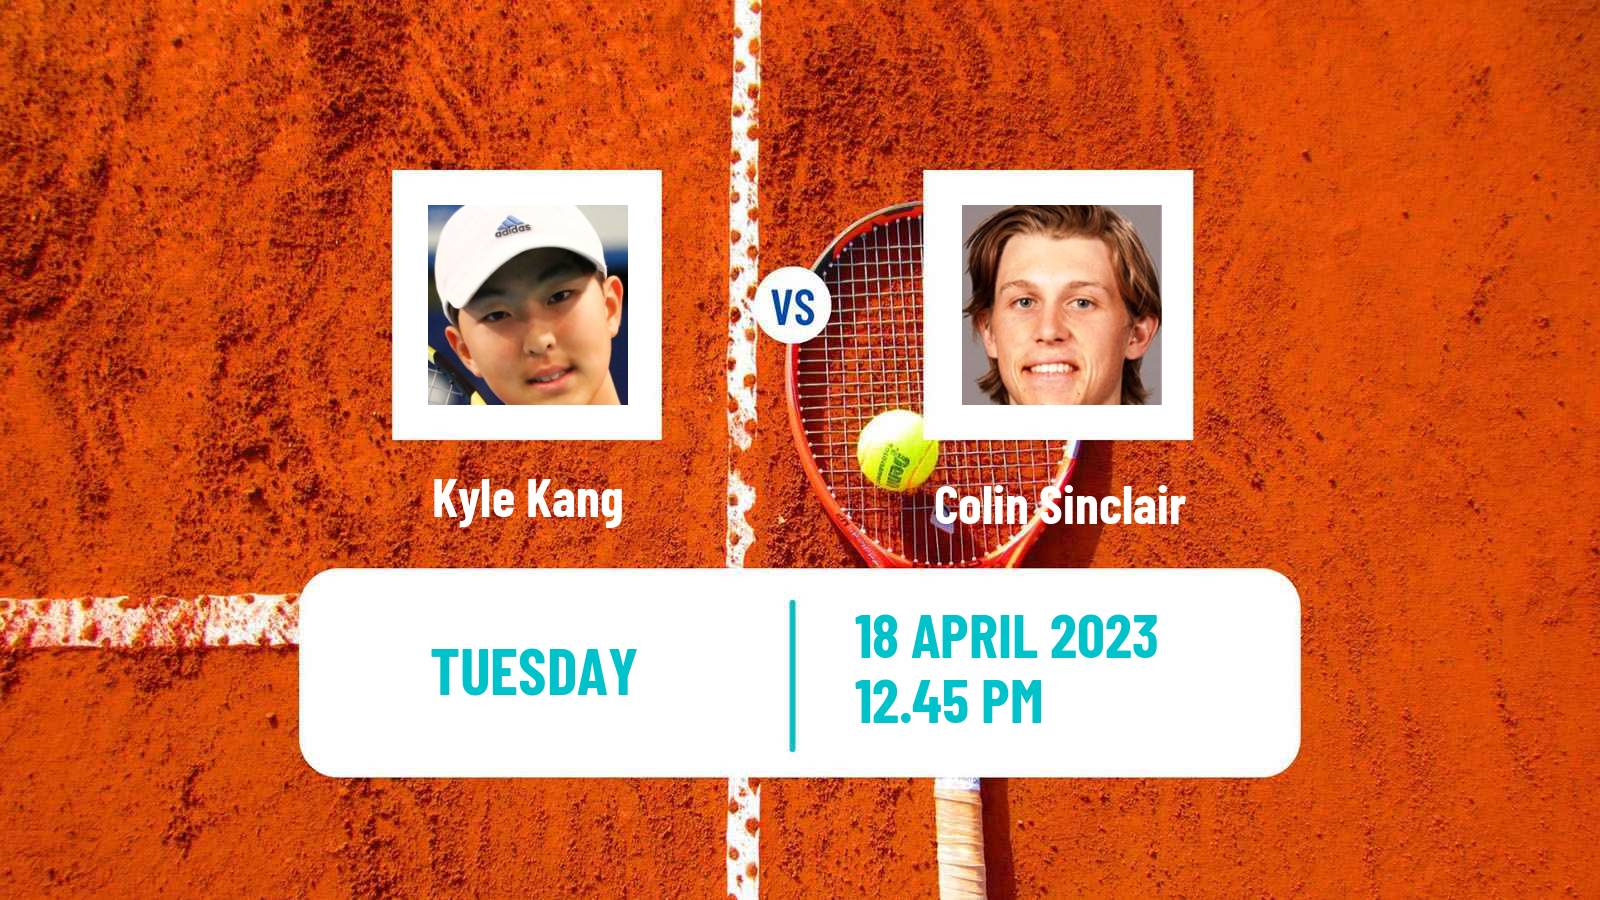 Tennis ATP Challenger Kyle Kang - Colin Sinclair